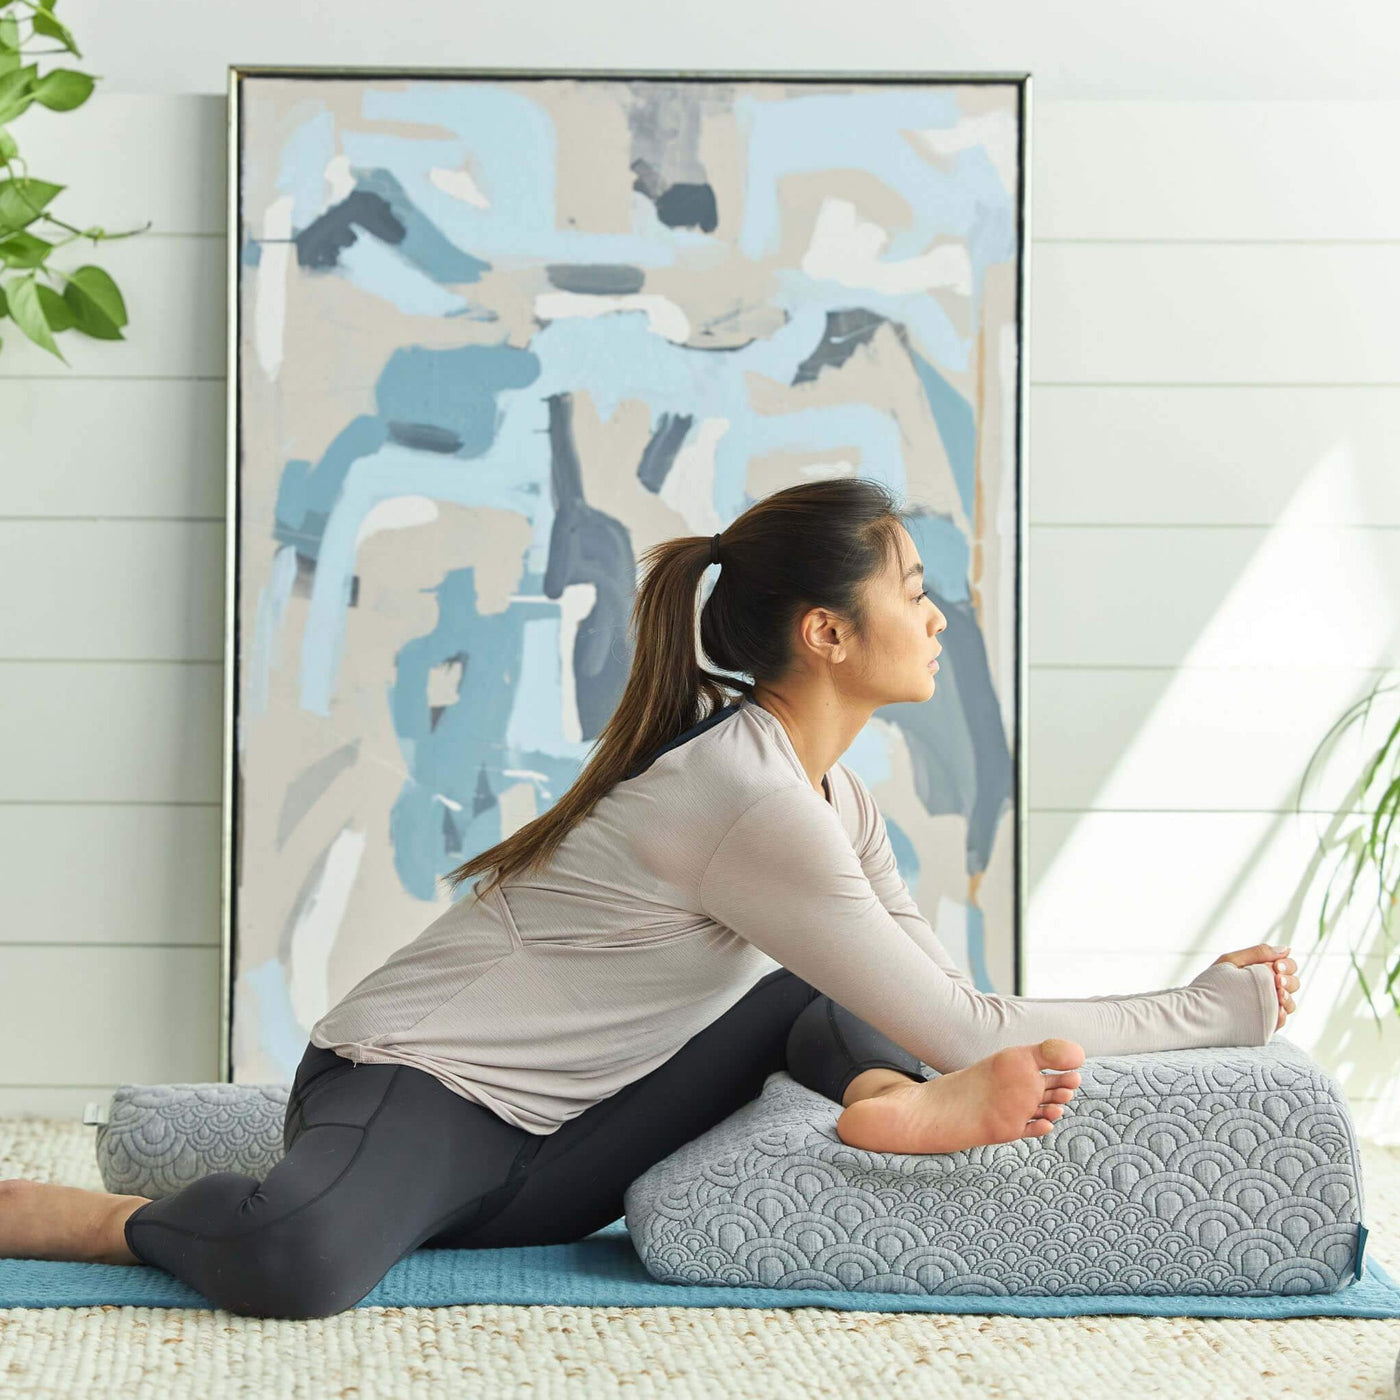 Leg Elevation Cushion with Memory Foam | Brentwood Home Cushion